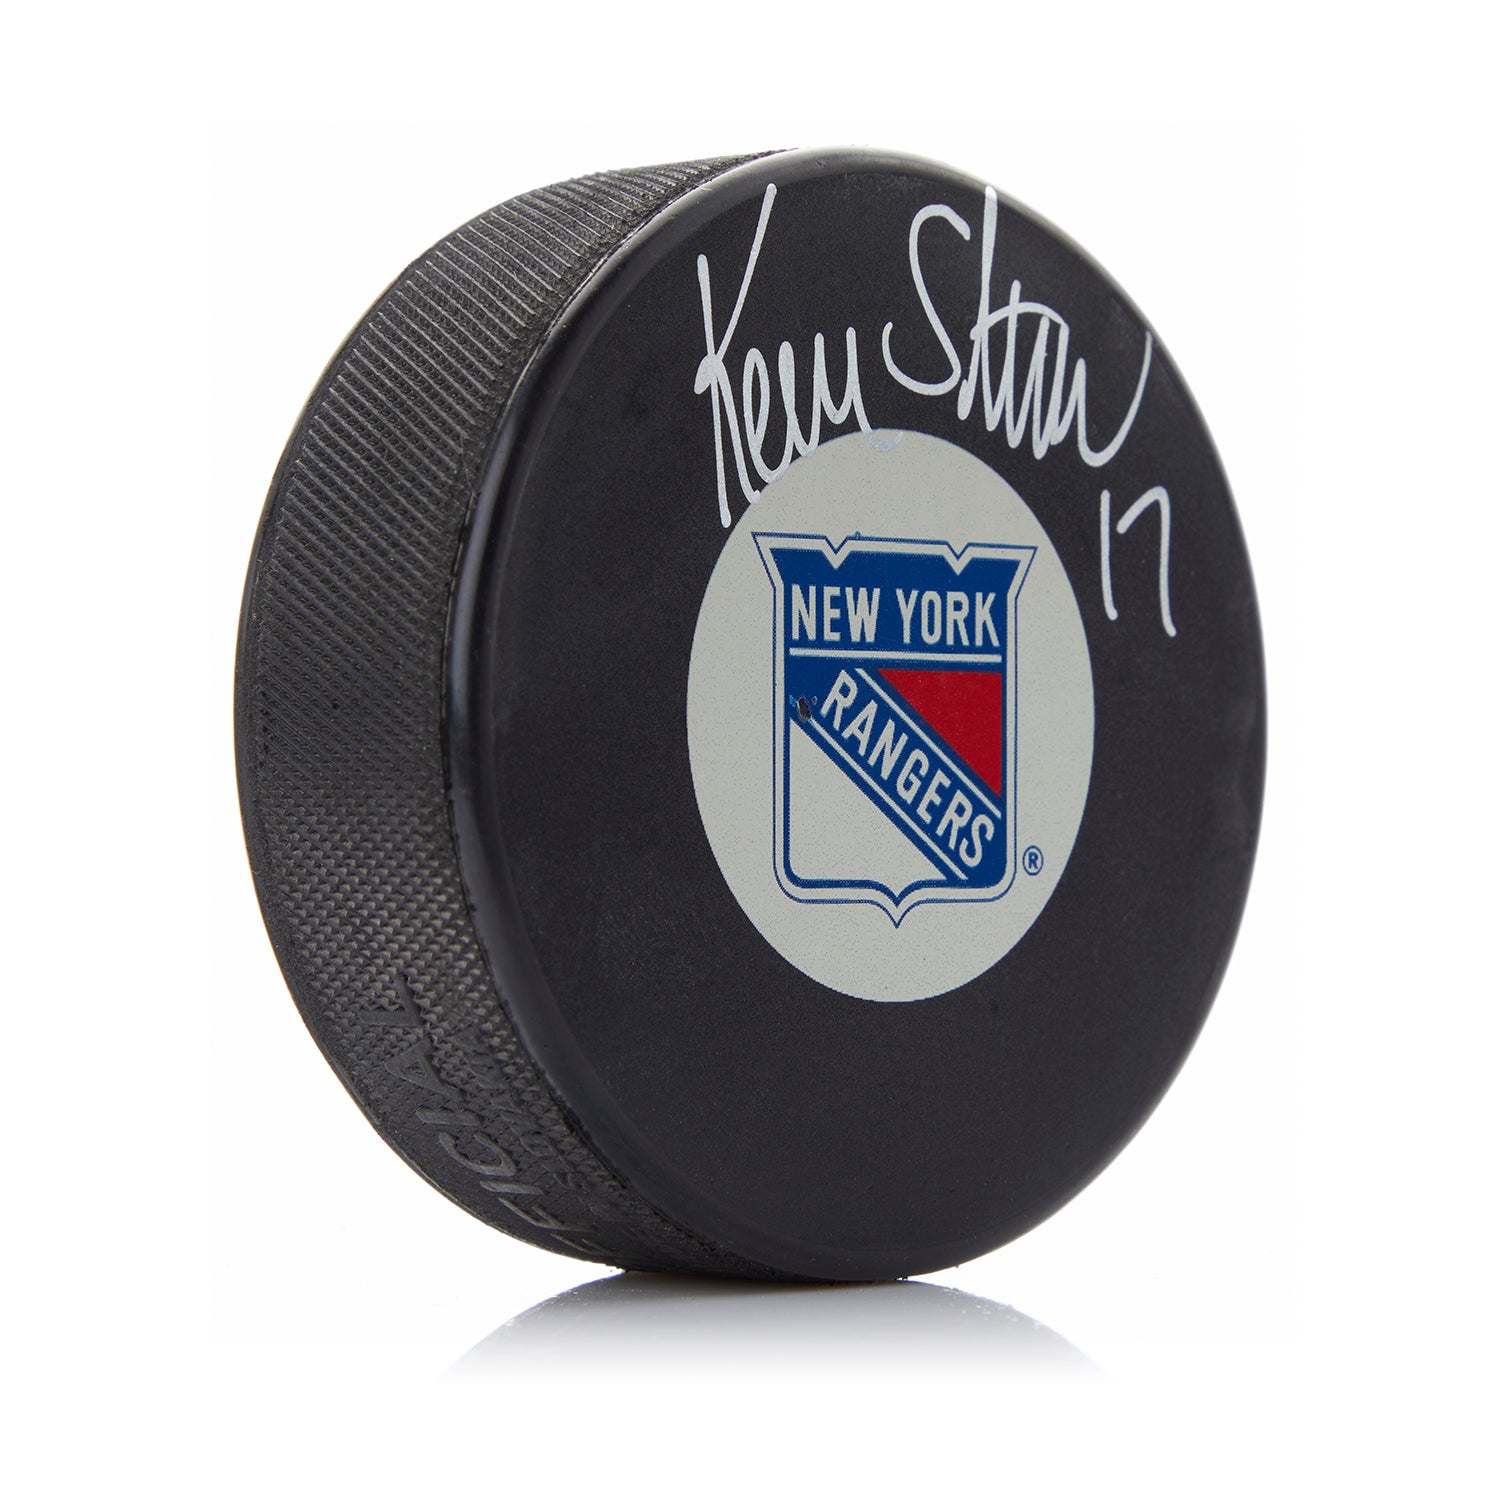 Kevin Stevens Autographed New York Rangers Hockey Puck